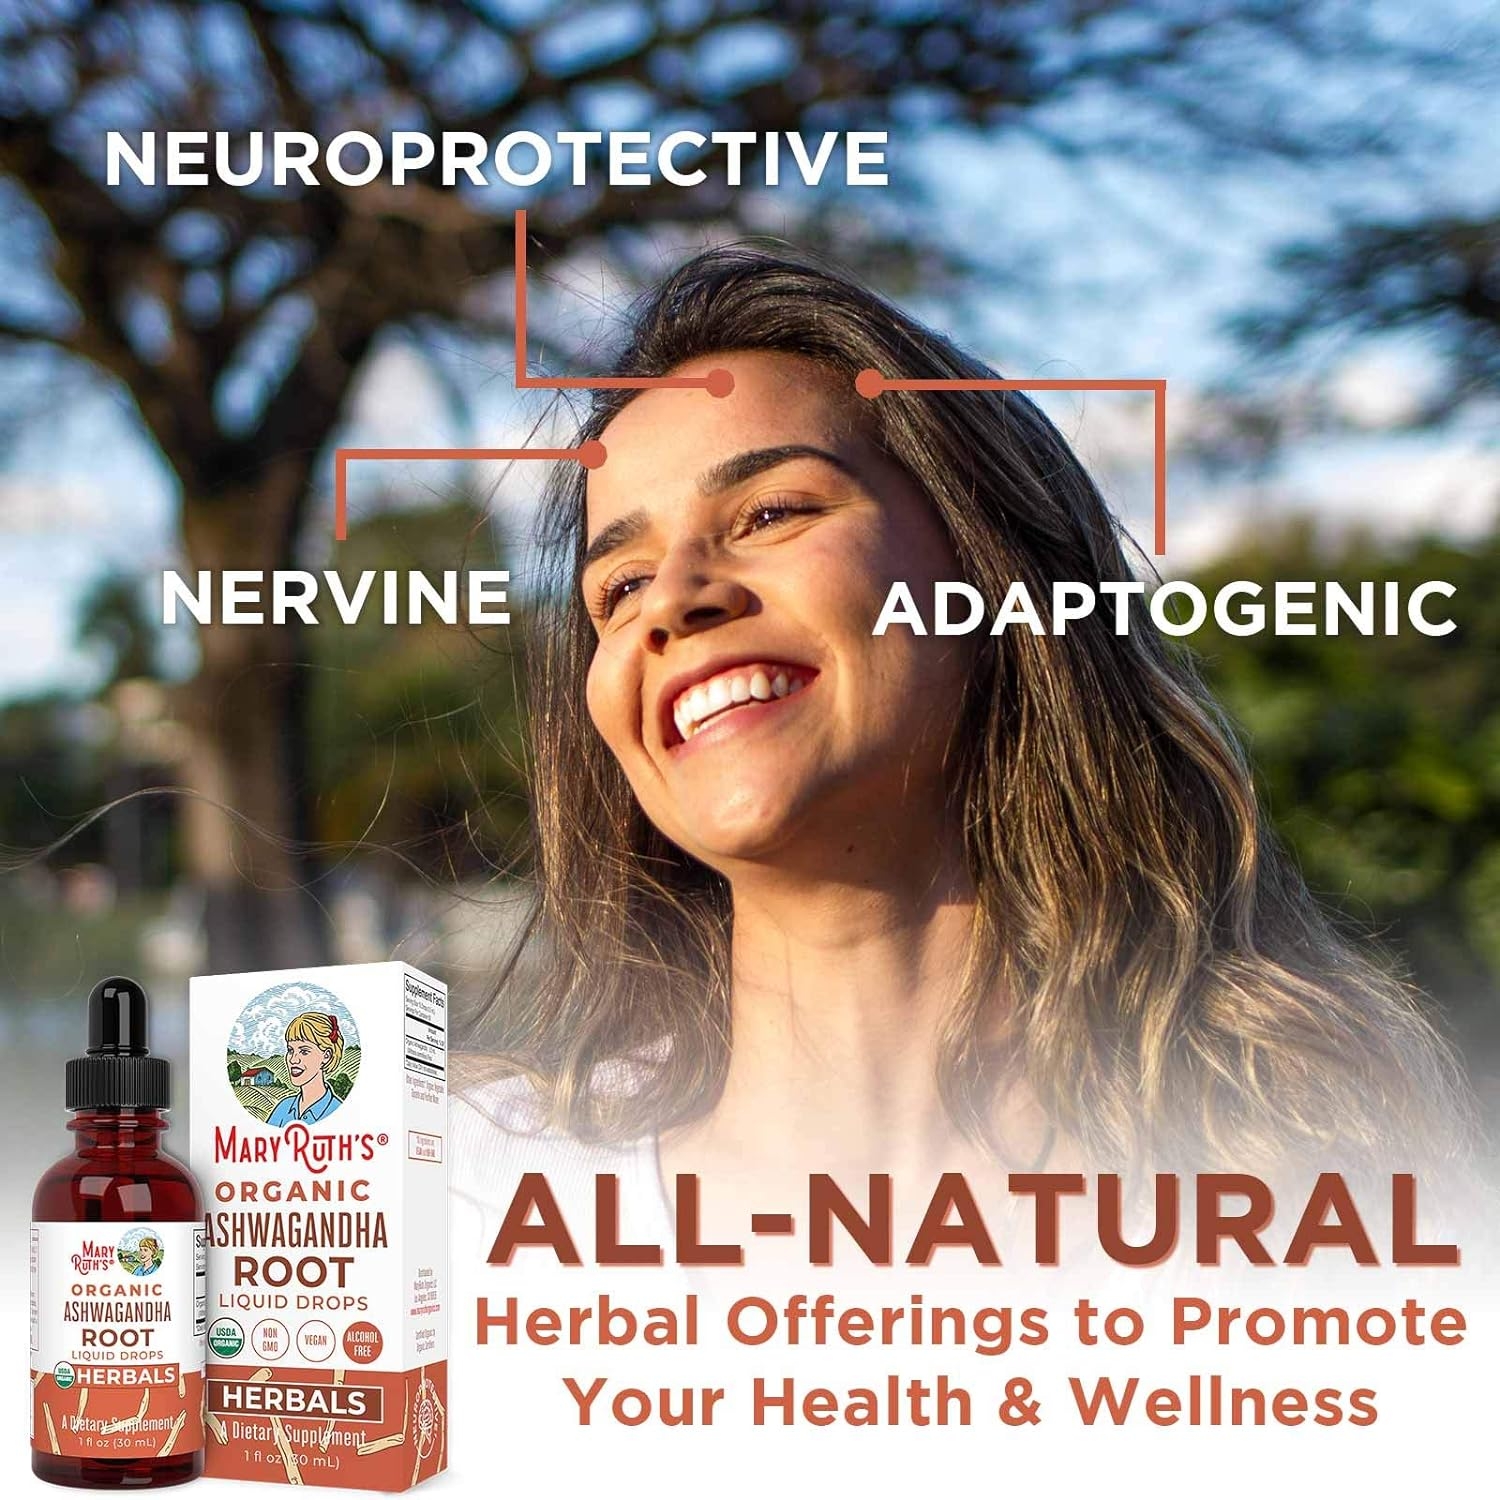 USDA Organic Ashwagandha Root Liquid Drops by MaryRuth's | Adaptogenic, Nervine, Neuroprotective | May Help Alleviate Stress & Regulate Homeostasis | Non-GMO, Vegan, 1oz